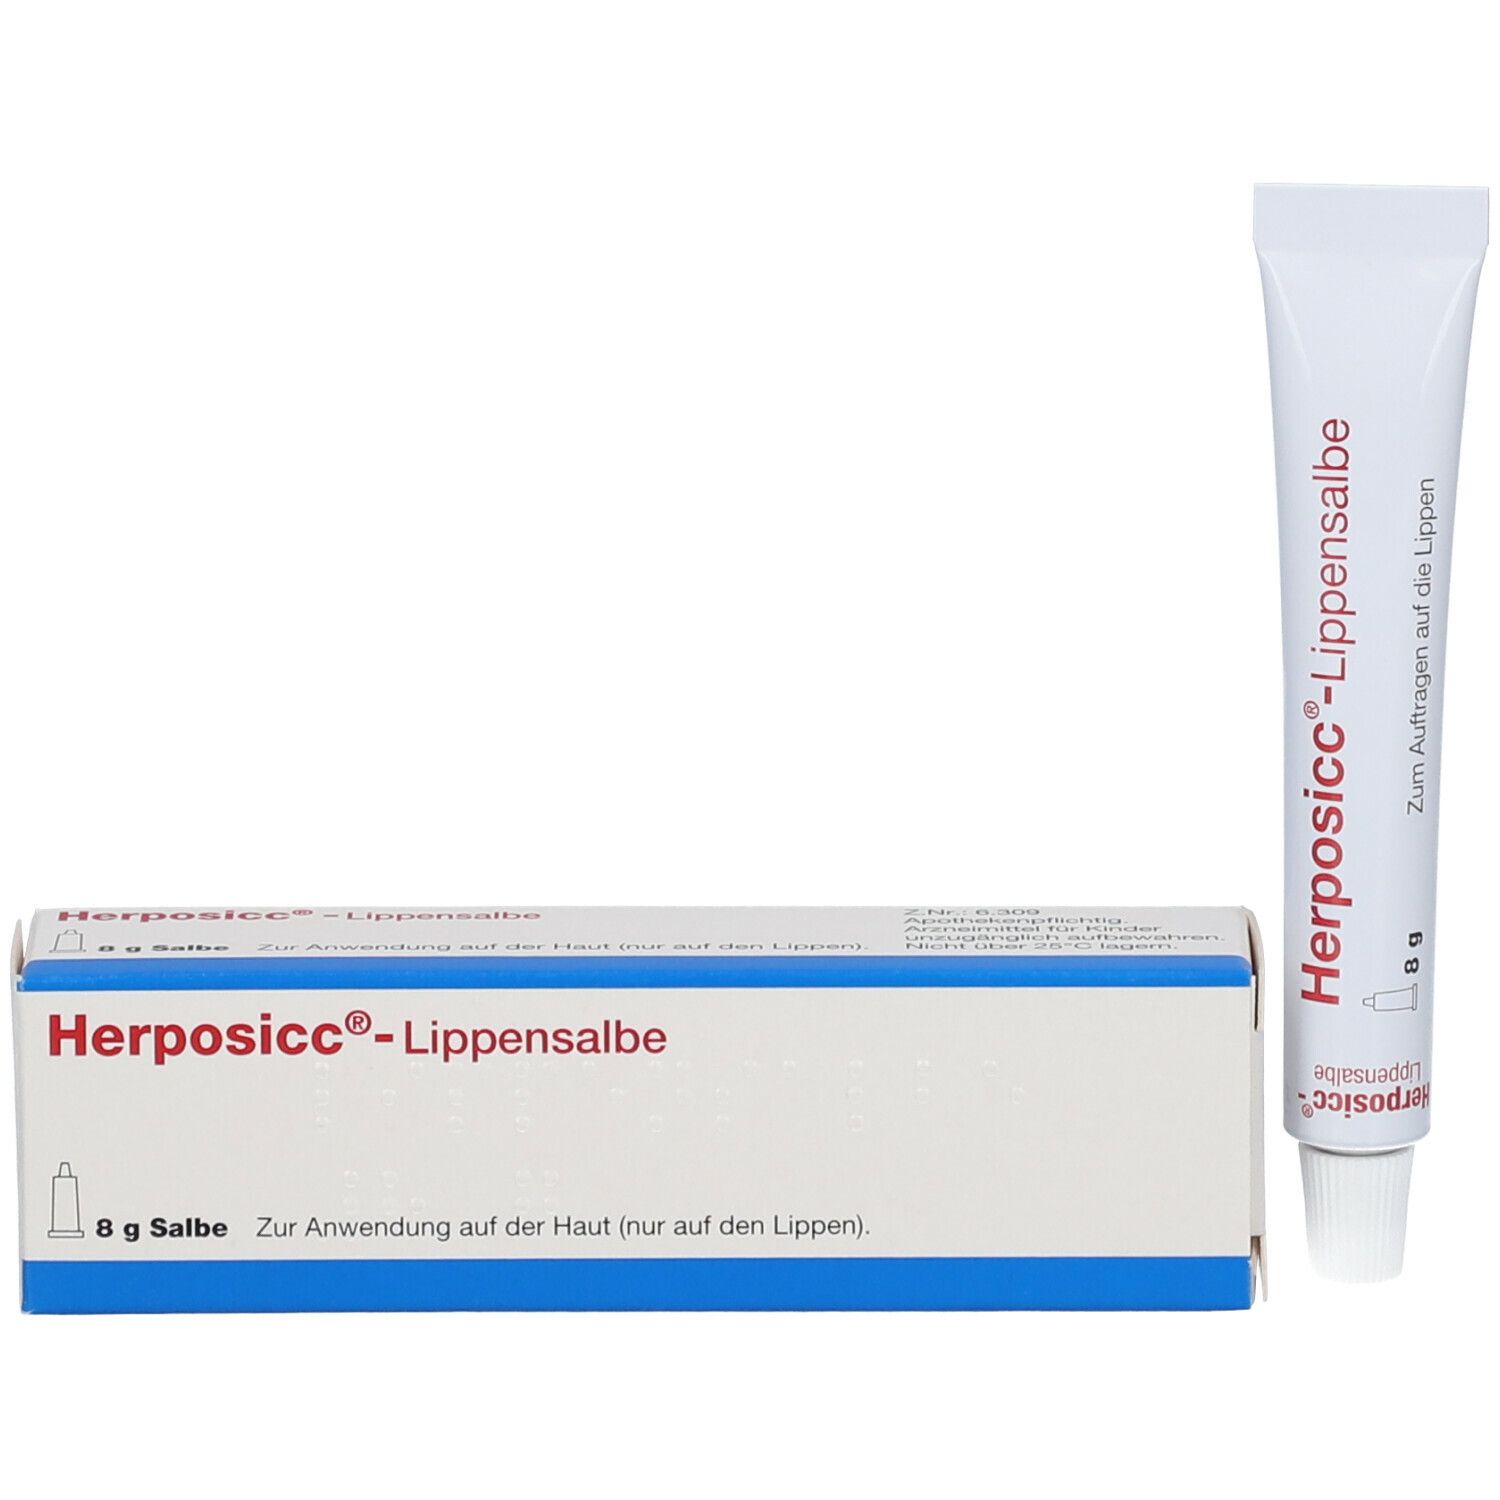 Herposicc®-Lippensalbe